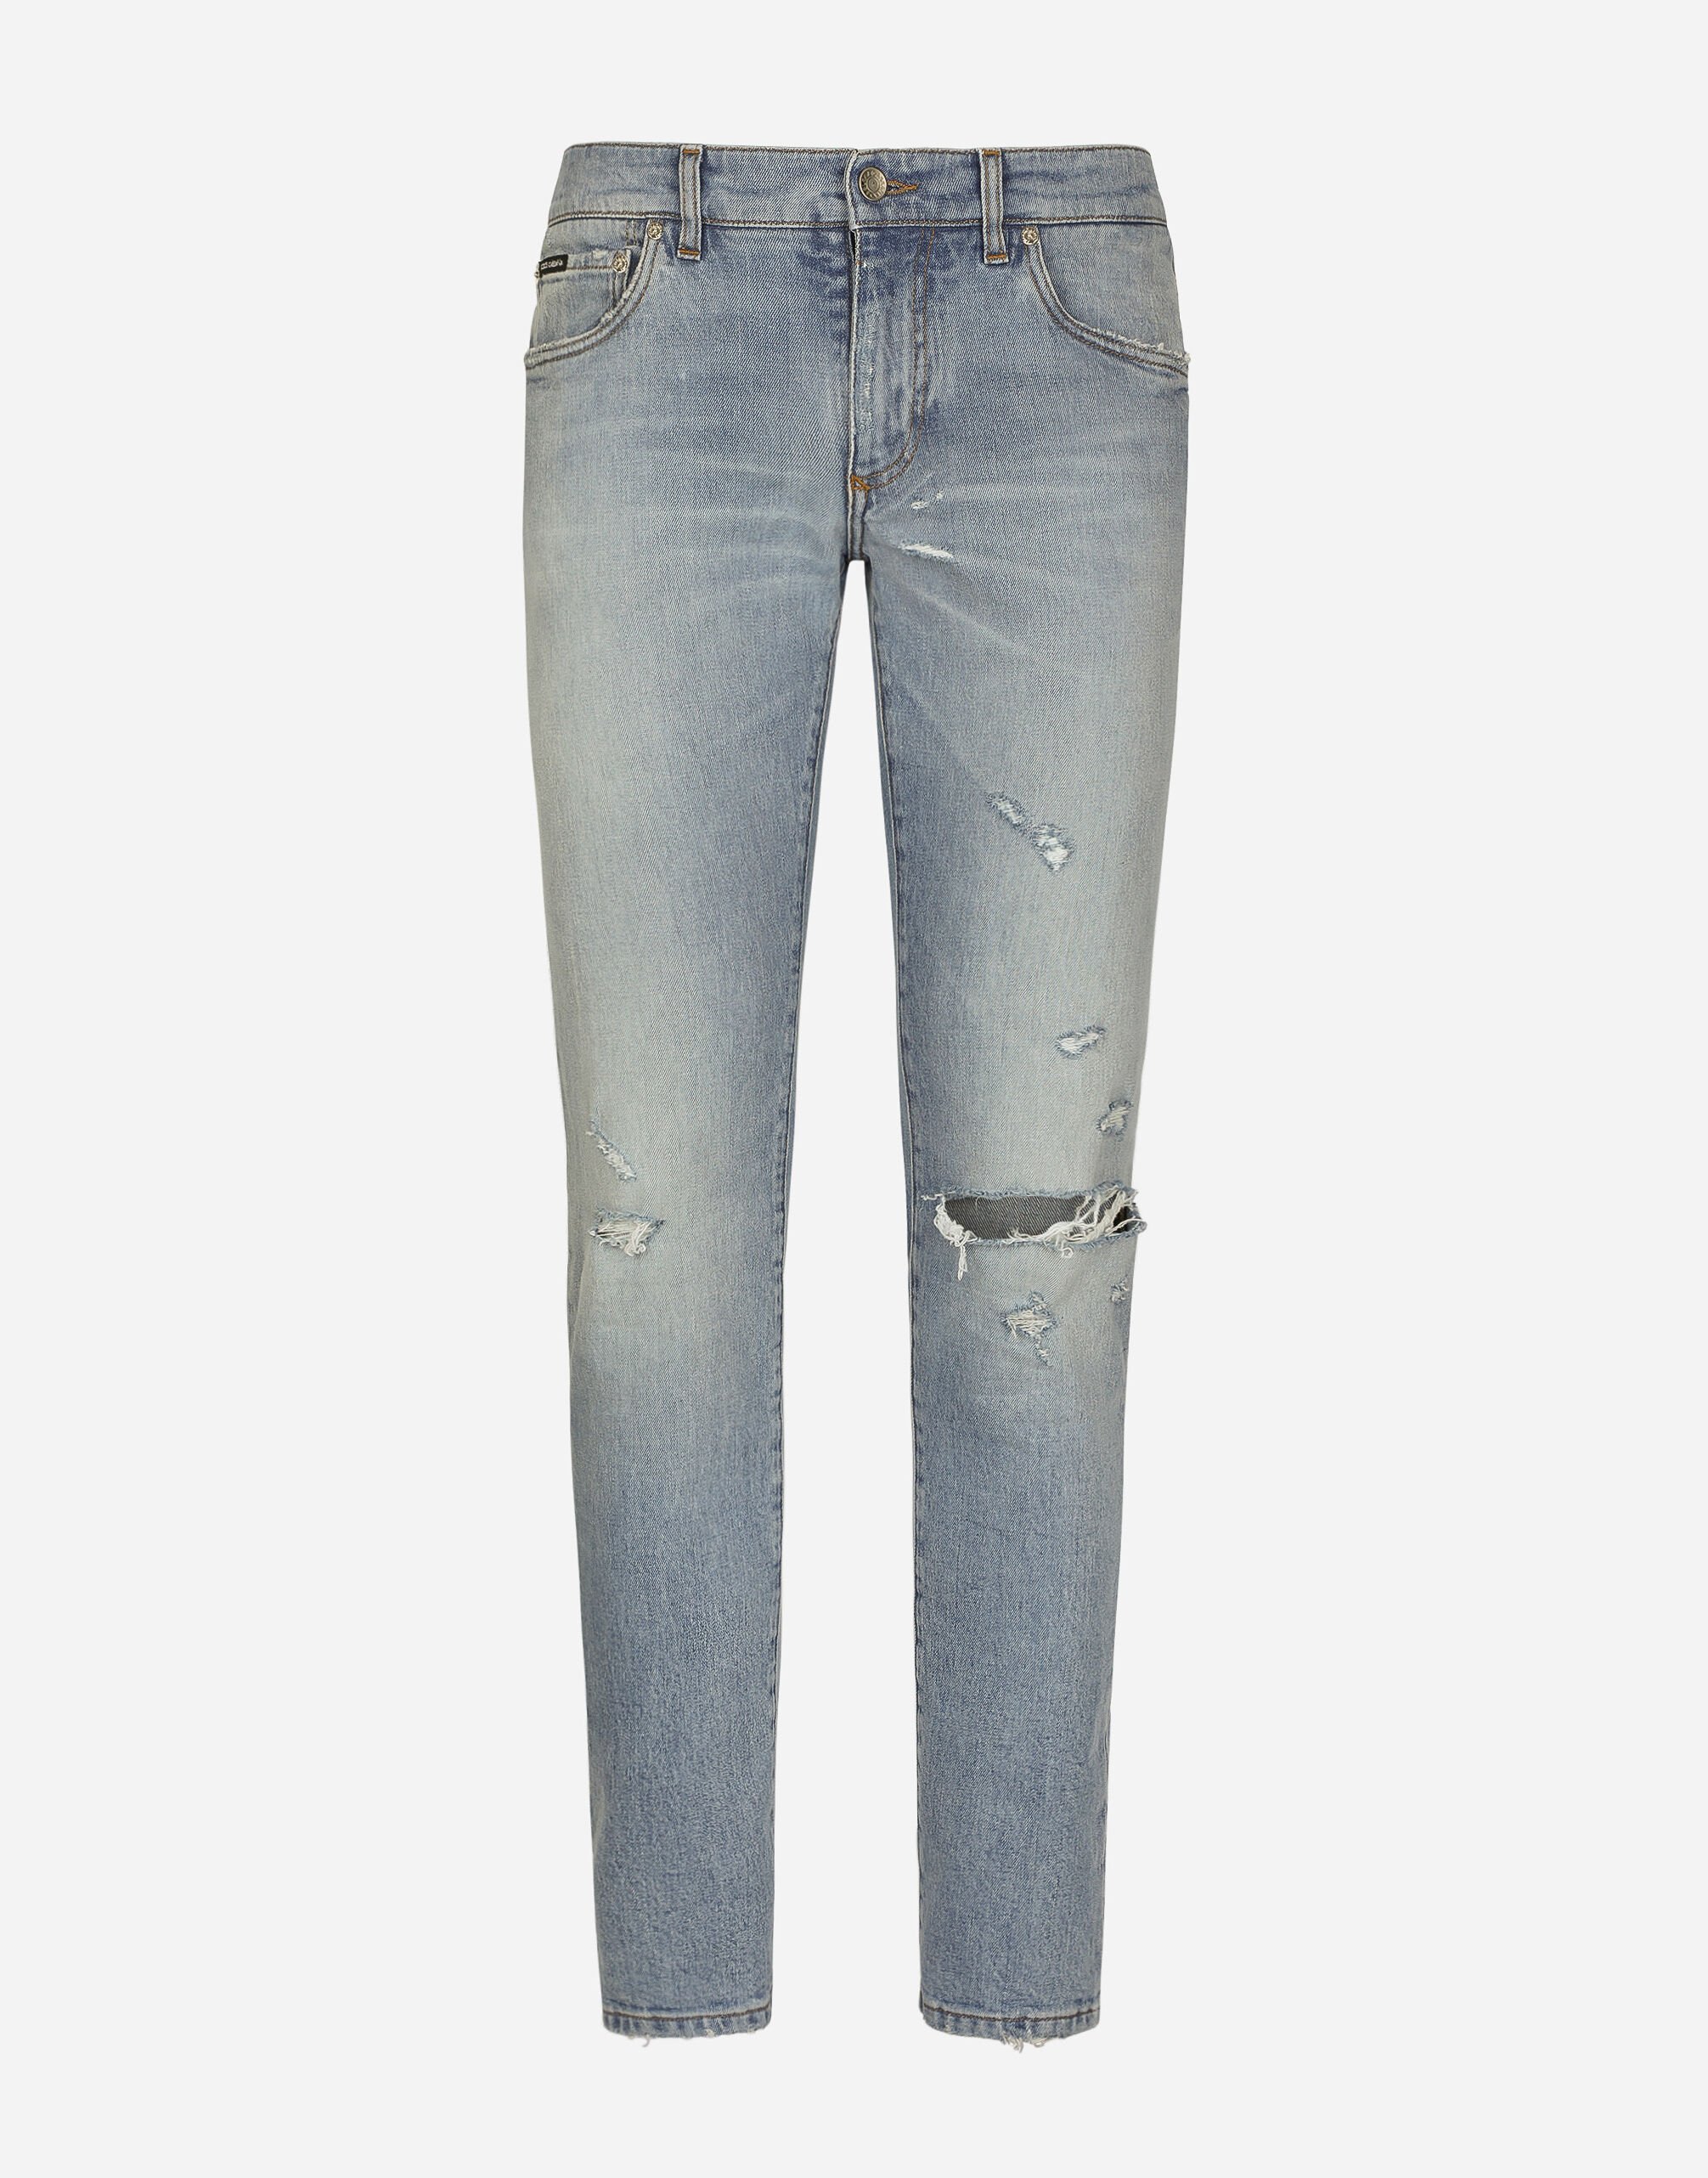 Dolce & Gabbana Jeans skinny in denim stretch lavato Multicolore G9NL5DG8GW9